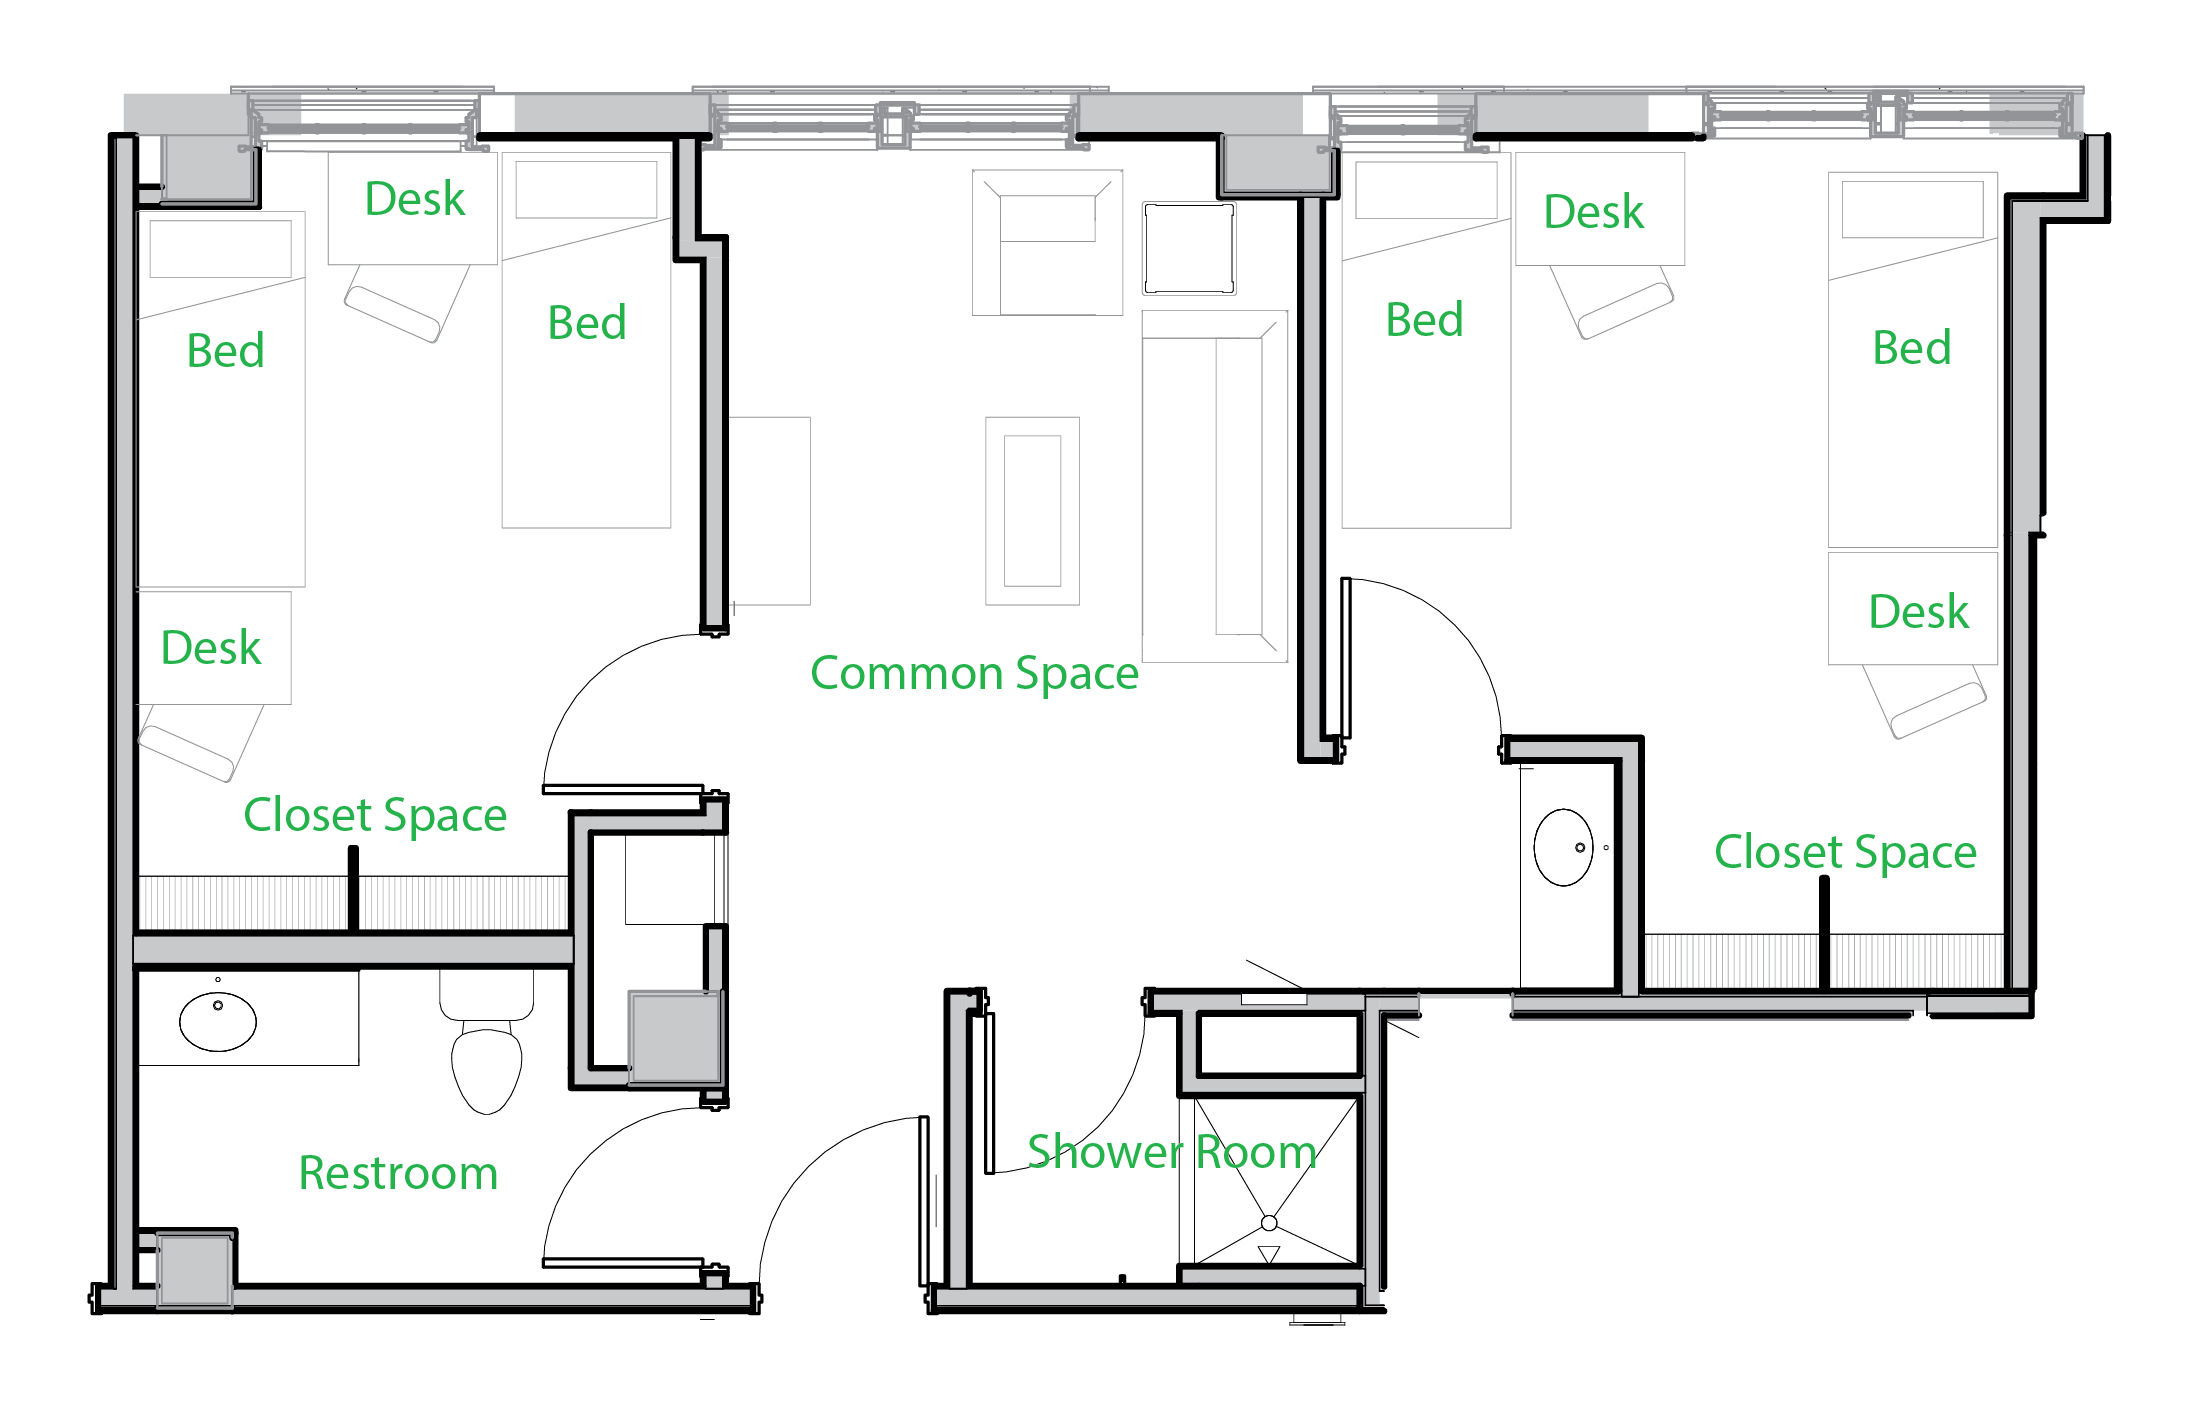 Double occupancy 4-person suite